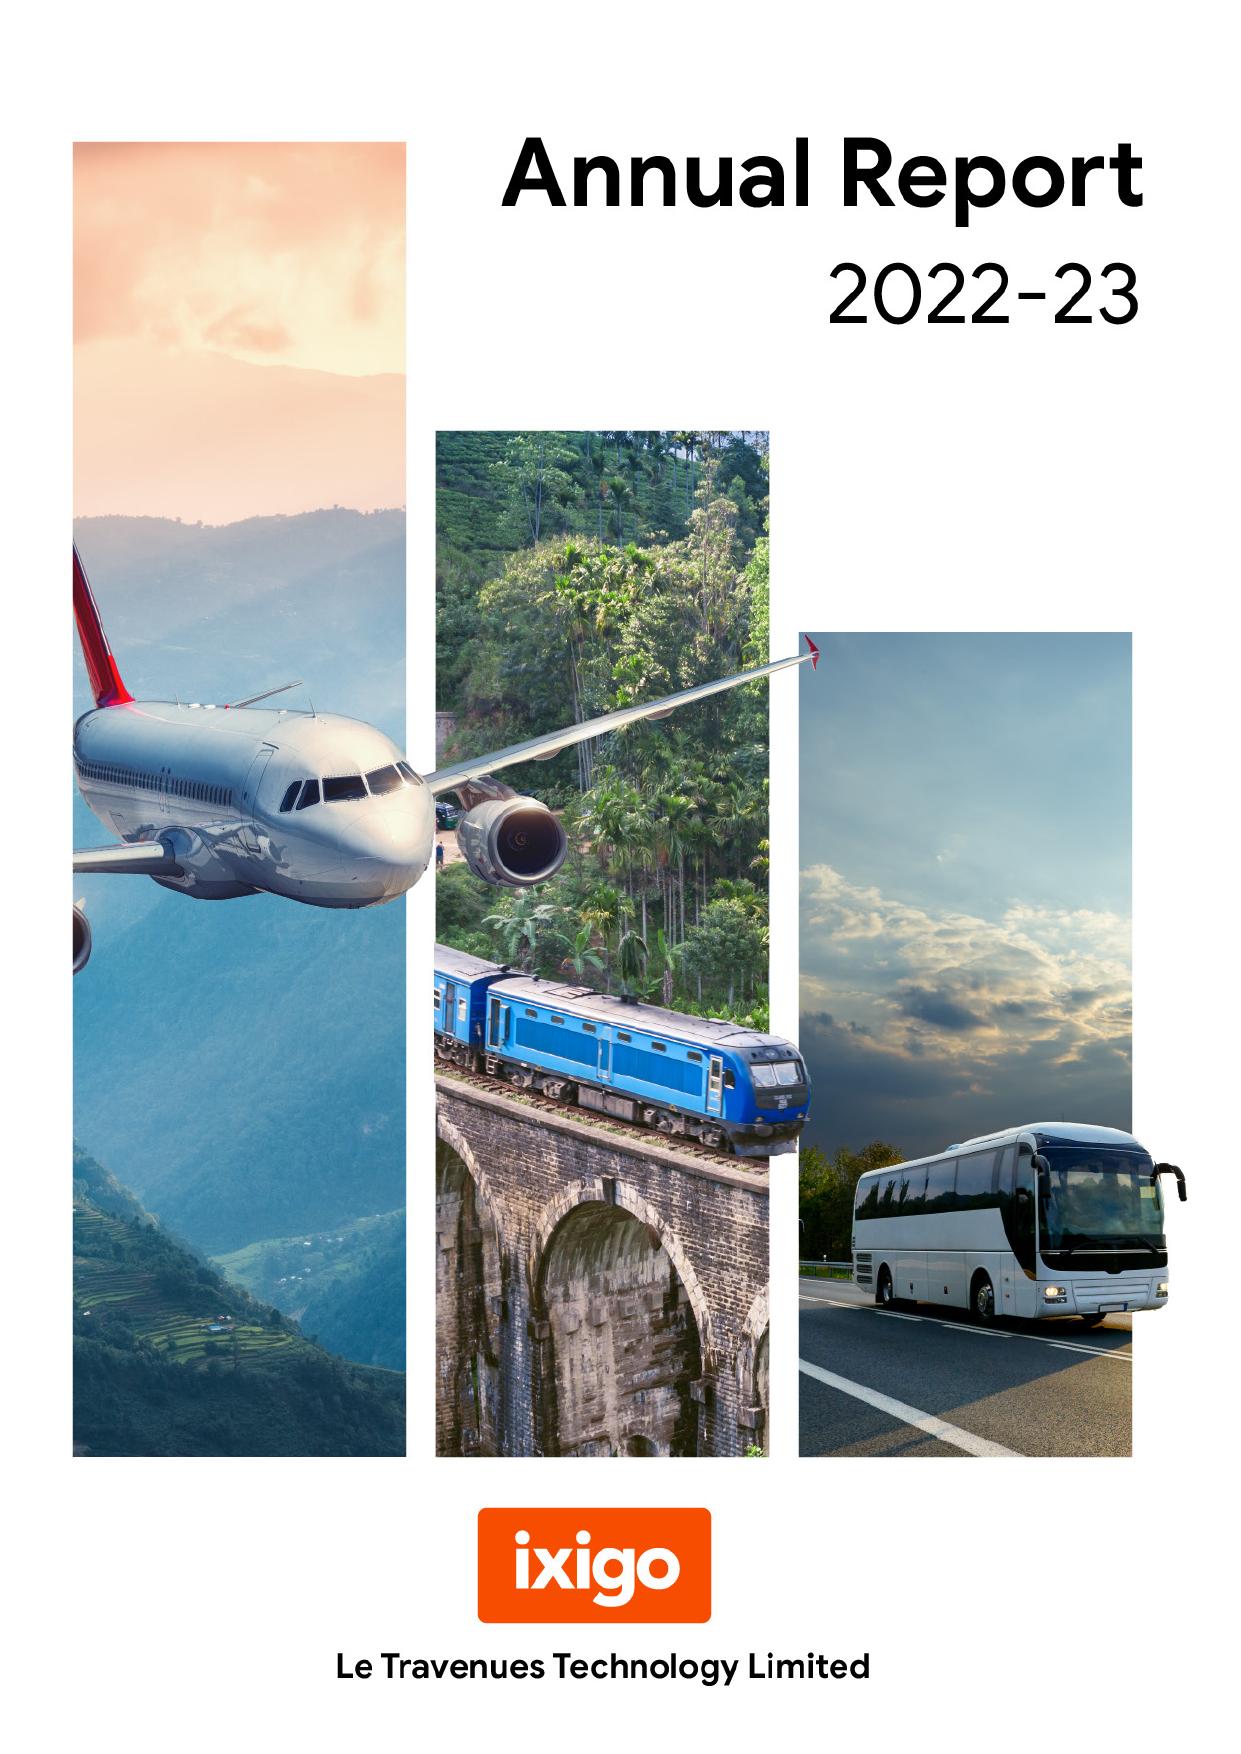 ABERDEENAIRPORT 2022 Annual Report